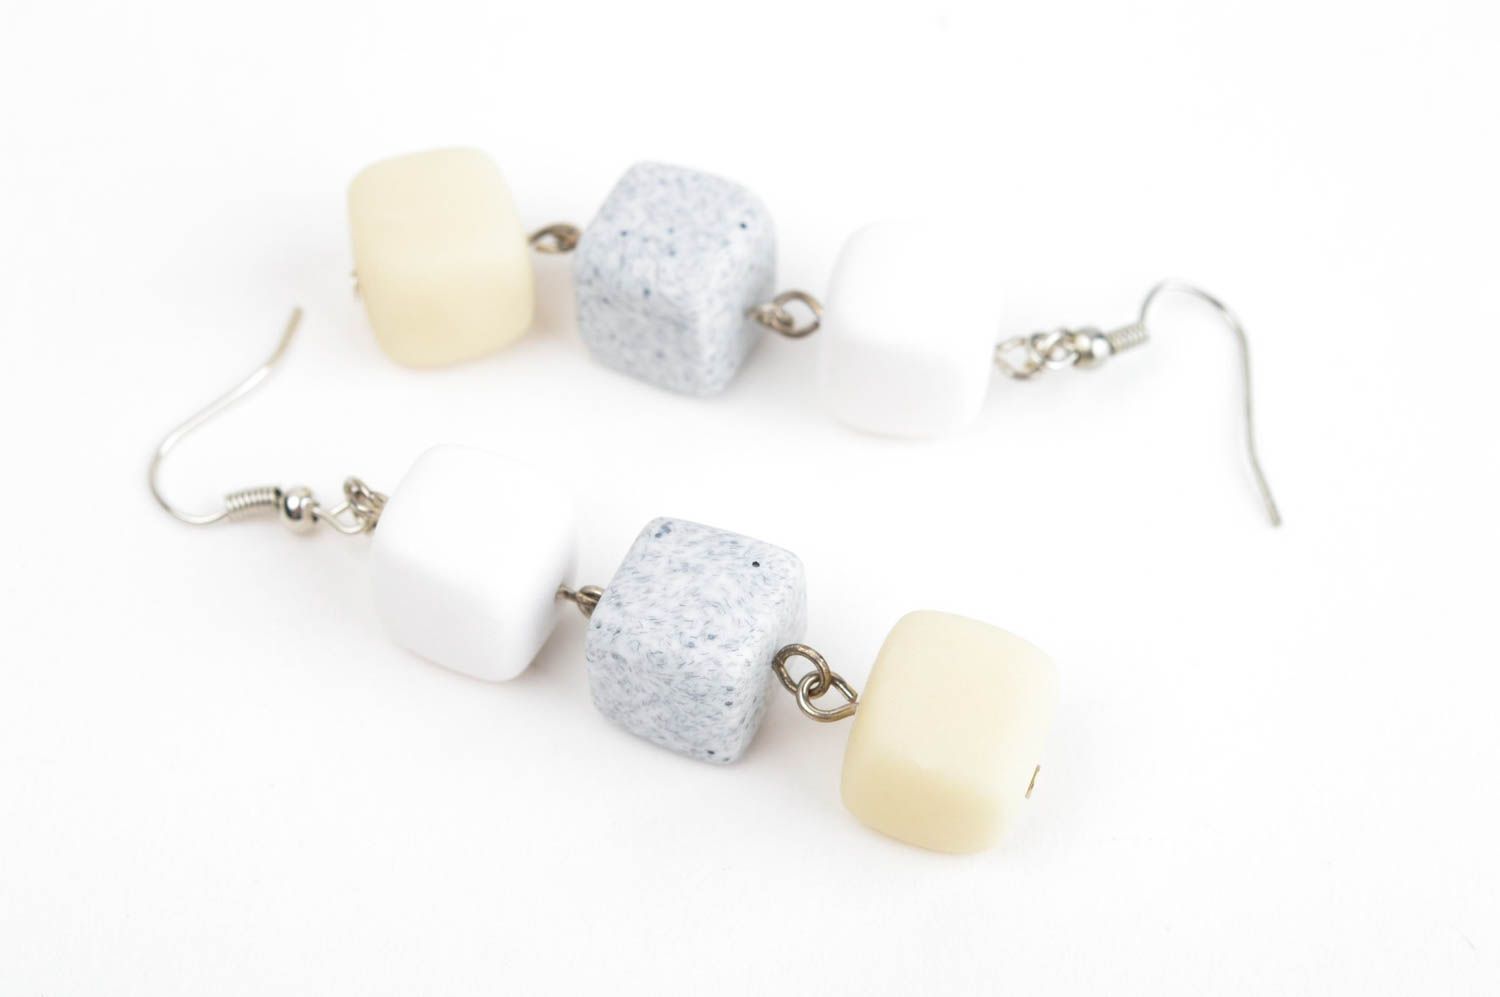 Handmade earrings unusual earrings clay jewelry designer accessory gift for her photo 3